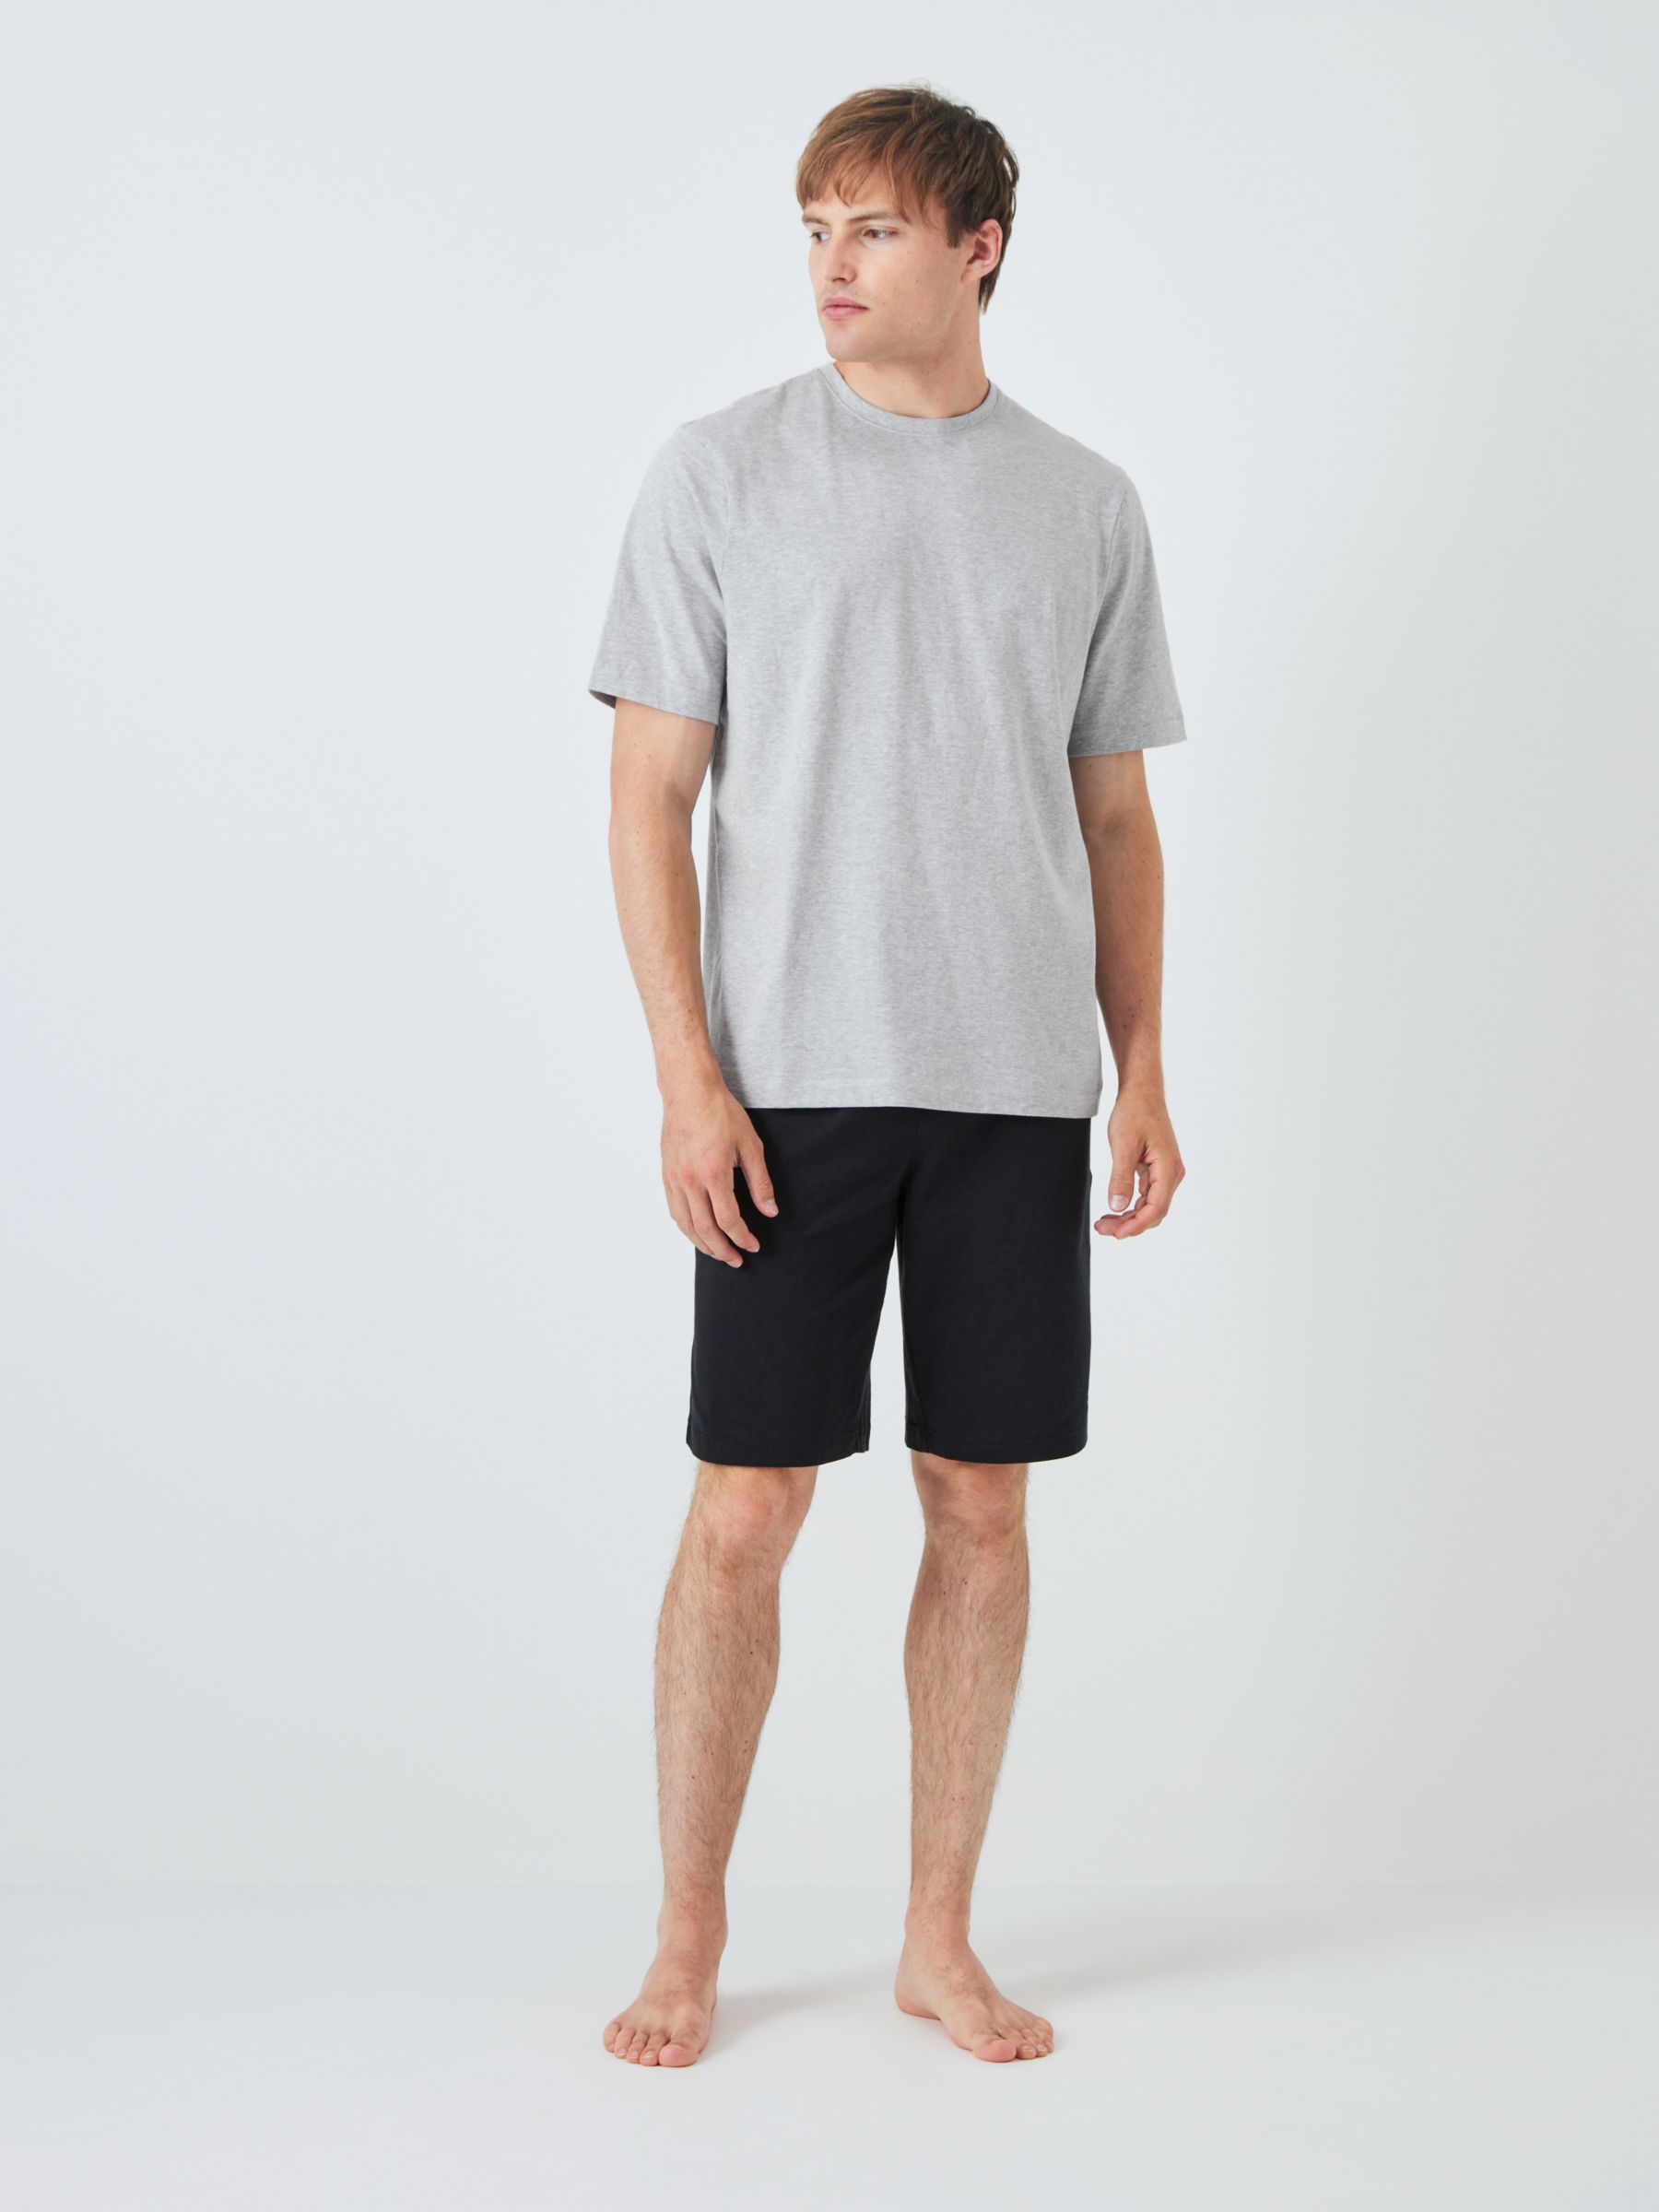 John Lewis ANYDAY Cotton Jersey T-Shirt & Shorts Pyjama Set, Black/Grey, XL